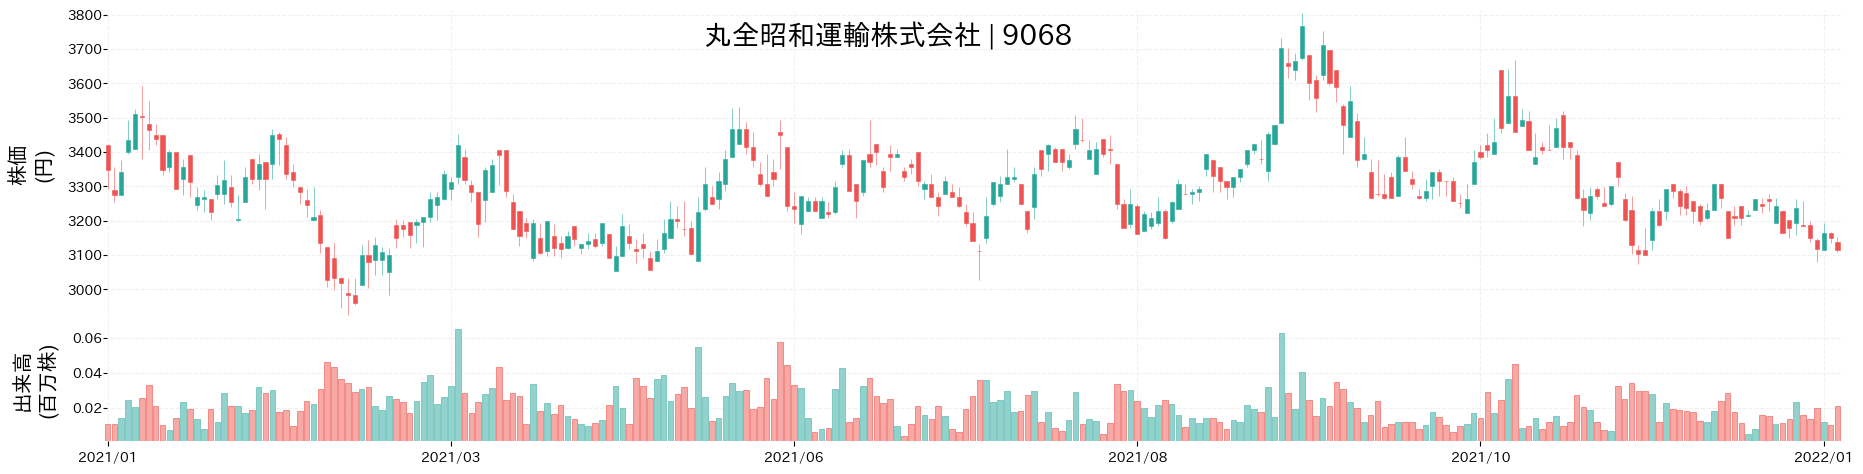 丸全昭和運輸の株価推移(2021)